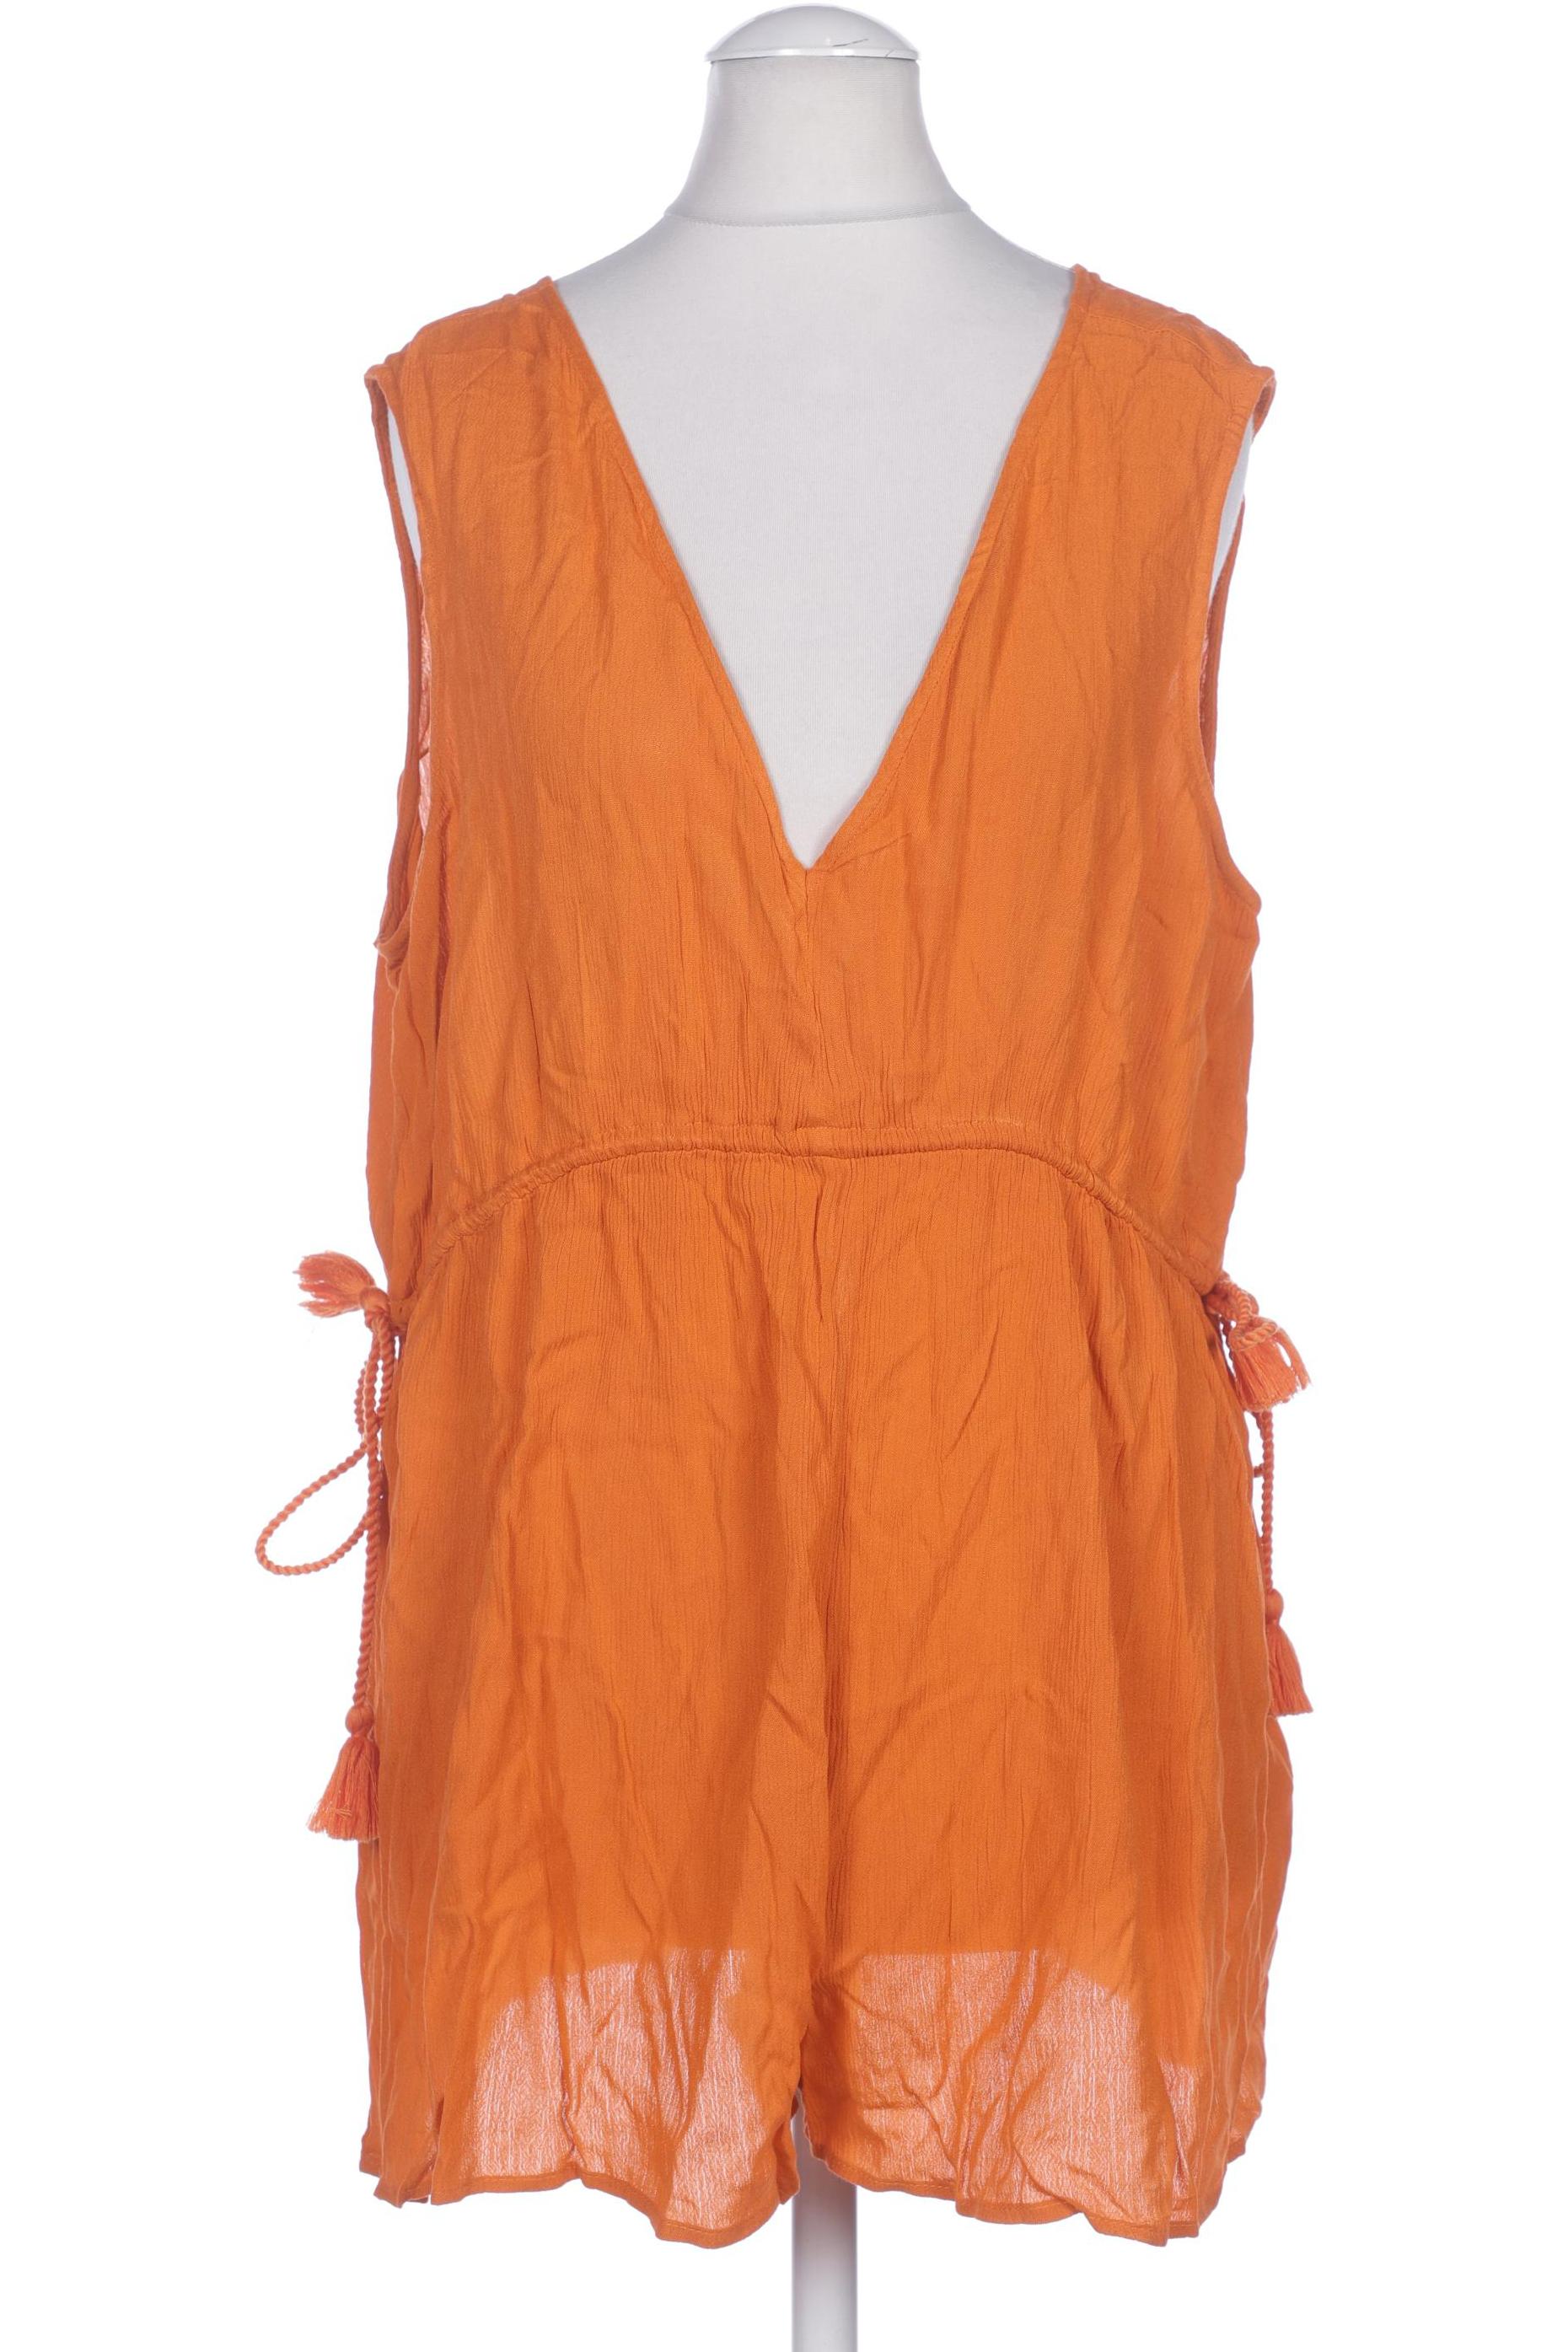 asos Damen Jumpsuit/Overall, orange, Gr. 34 von asos